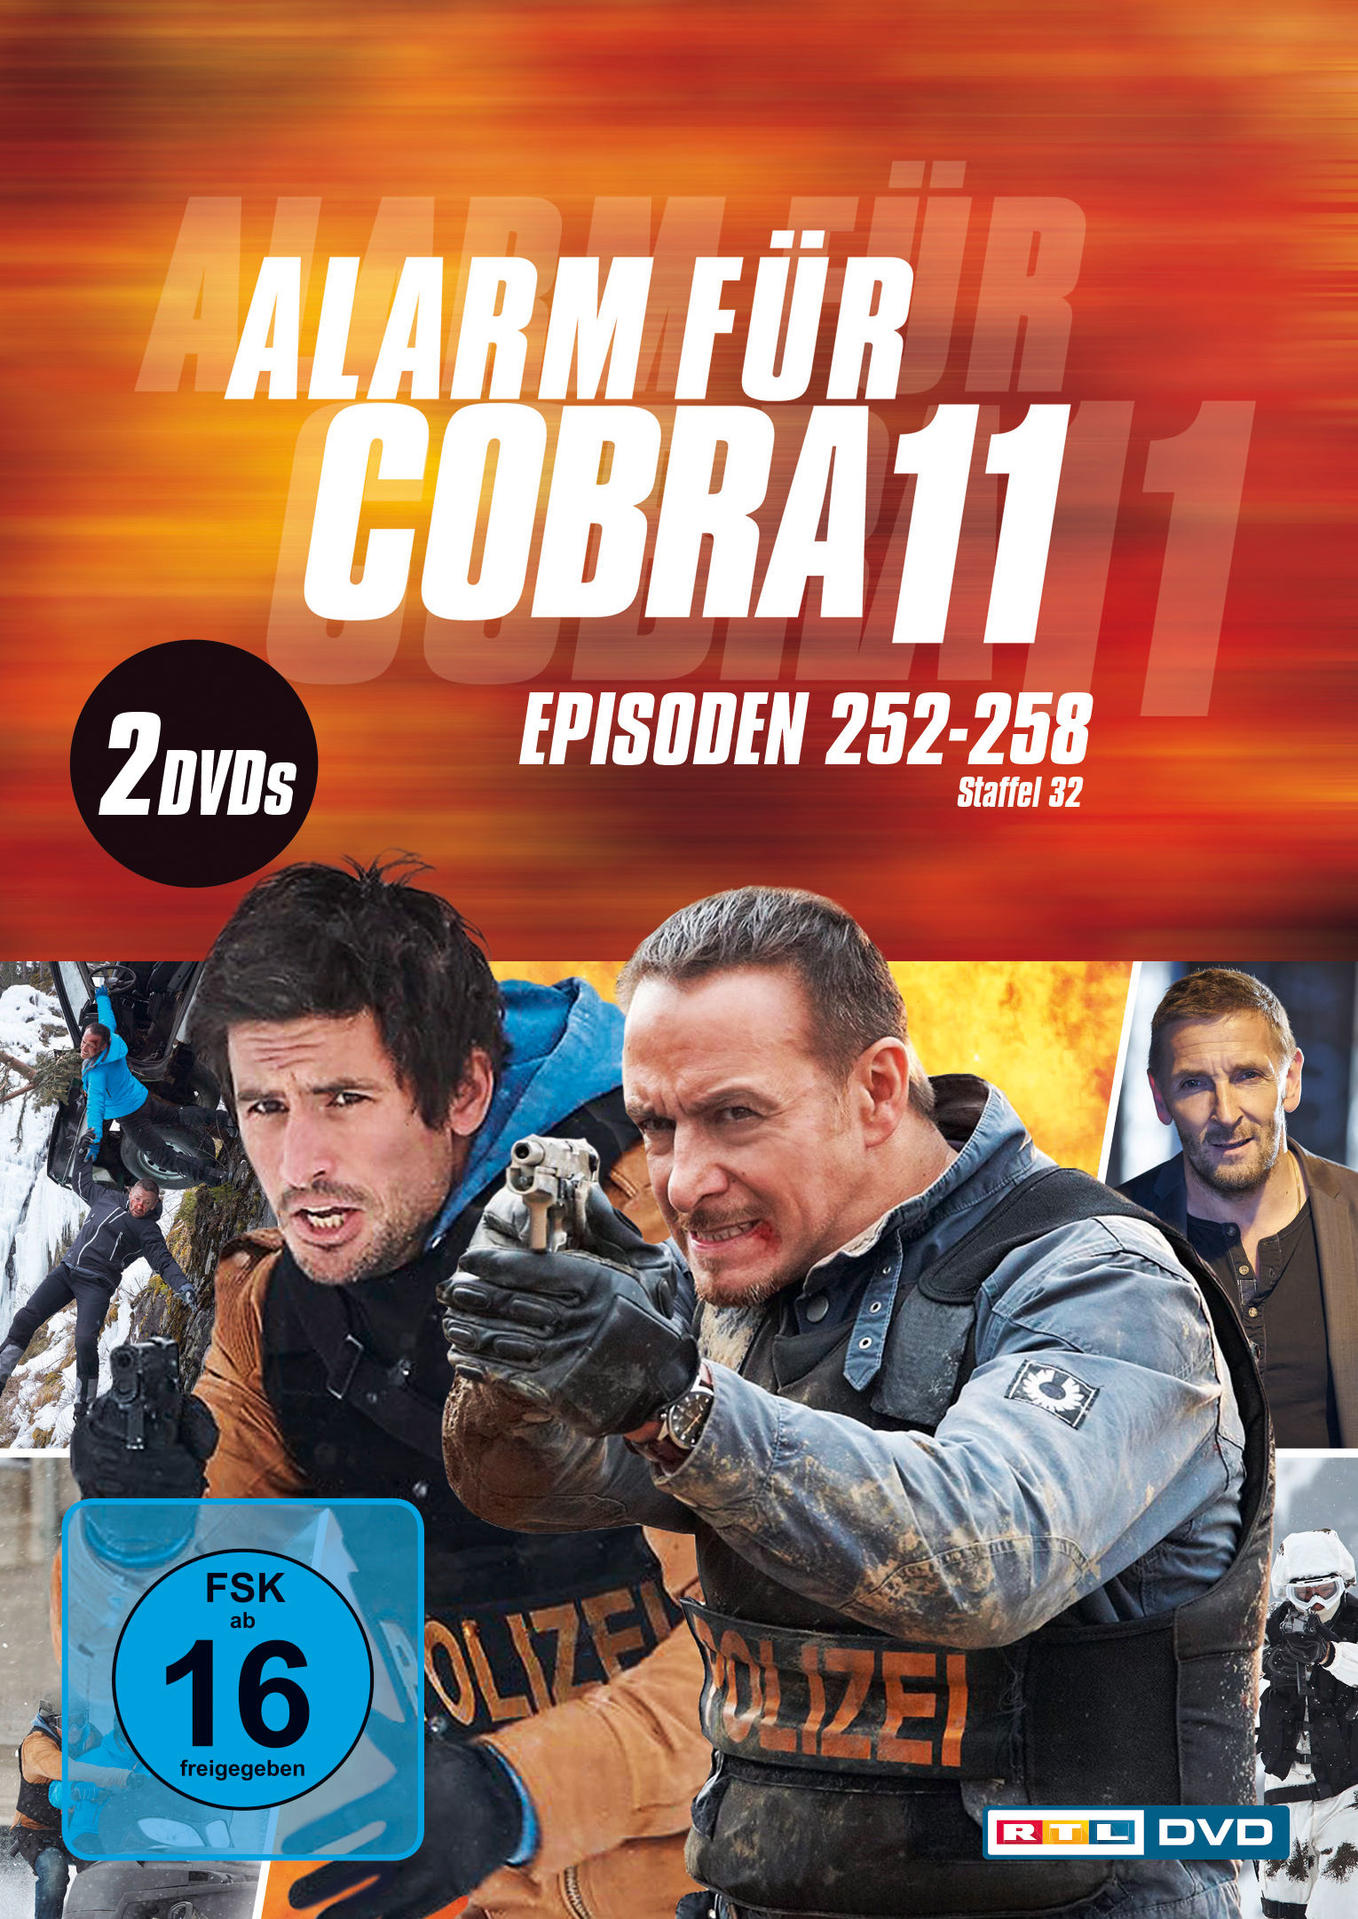 Alarm für Cobra 11 Staffel 32 - DVD